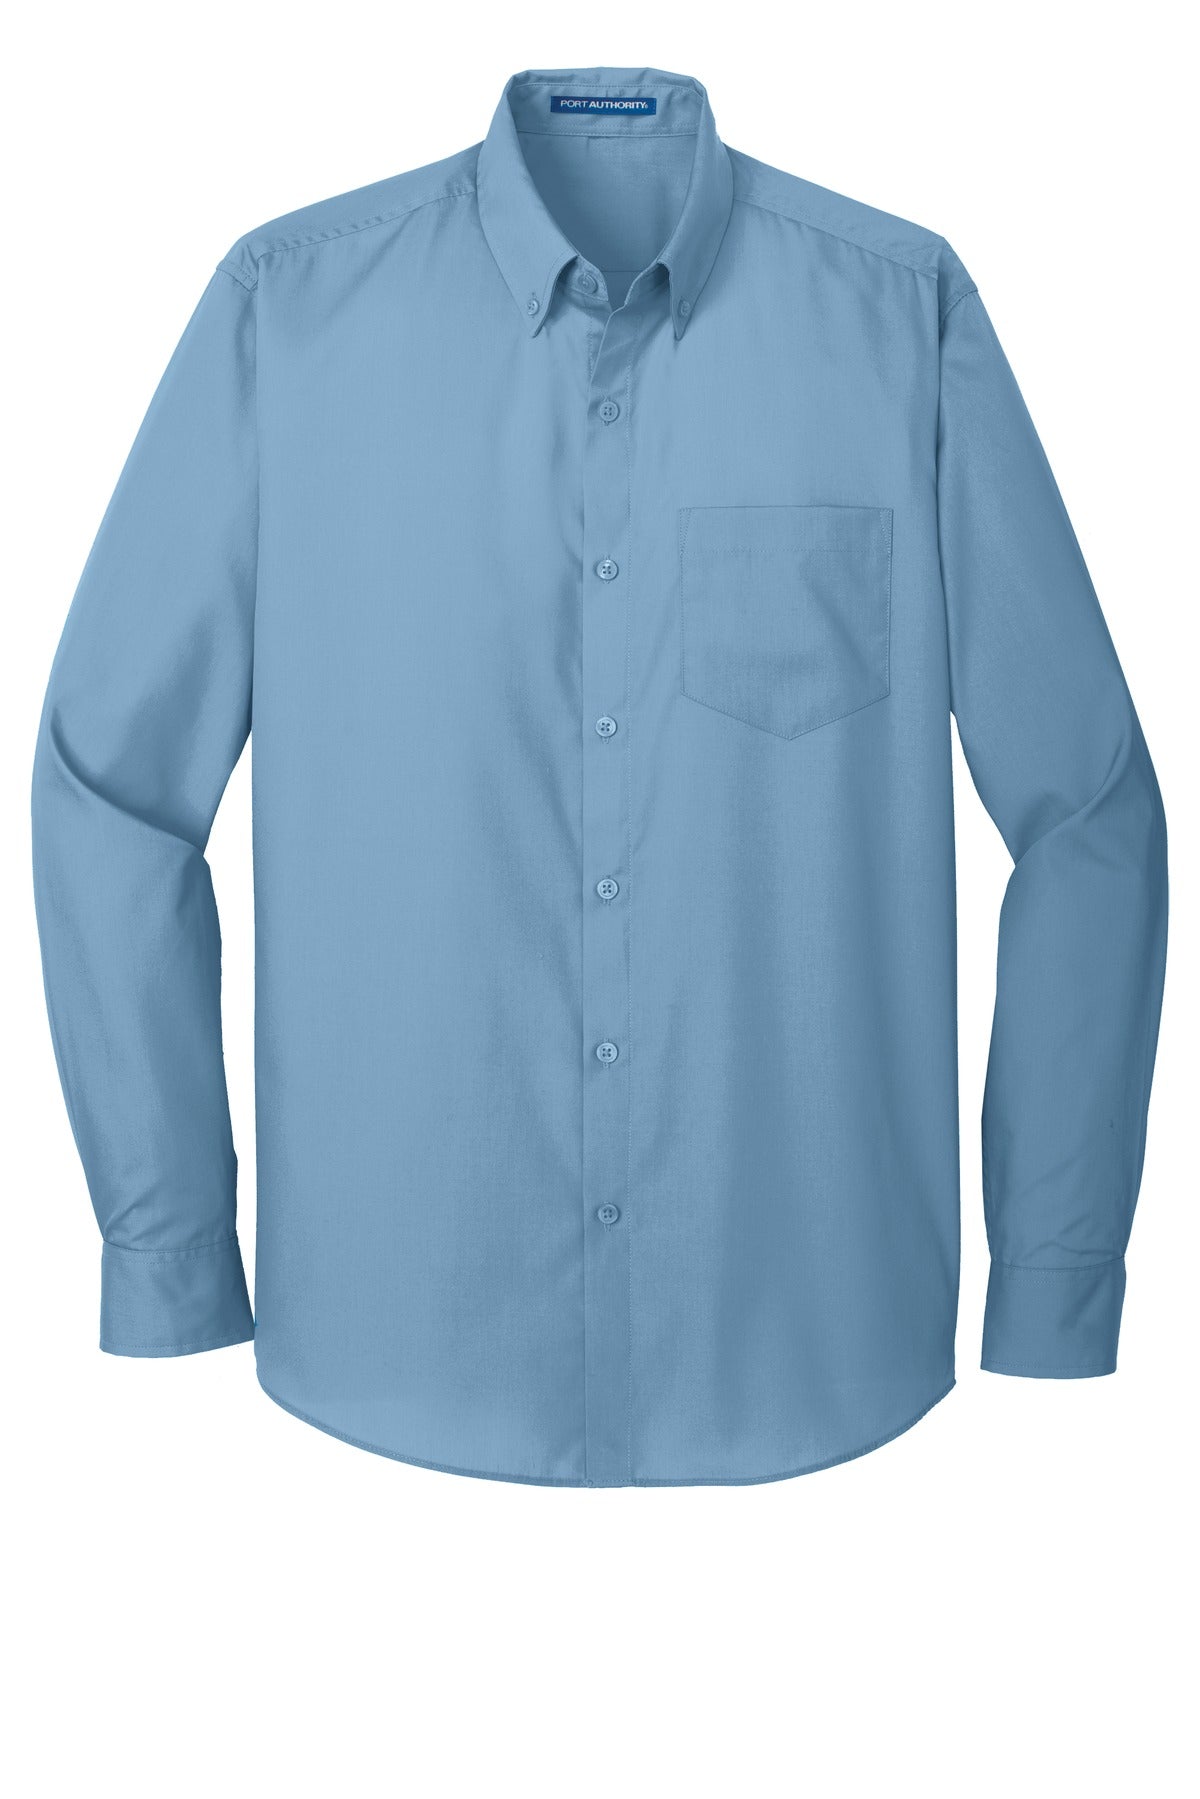 Port Authority Long Sleeve Carefree Poplin Shirt. W100